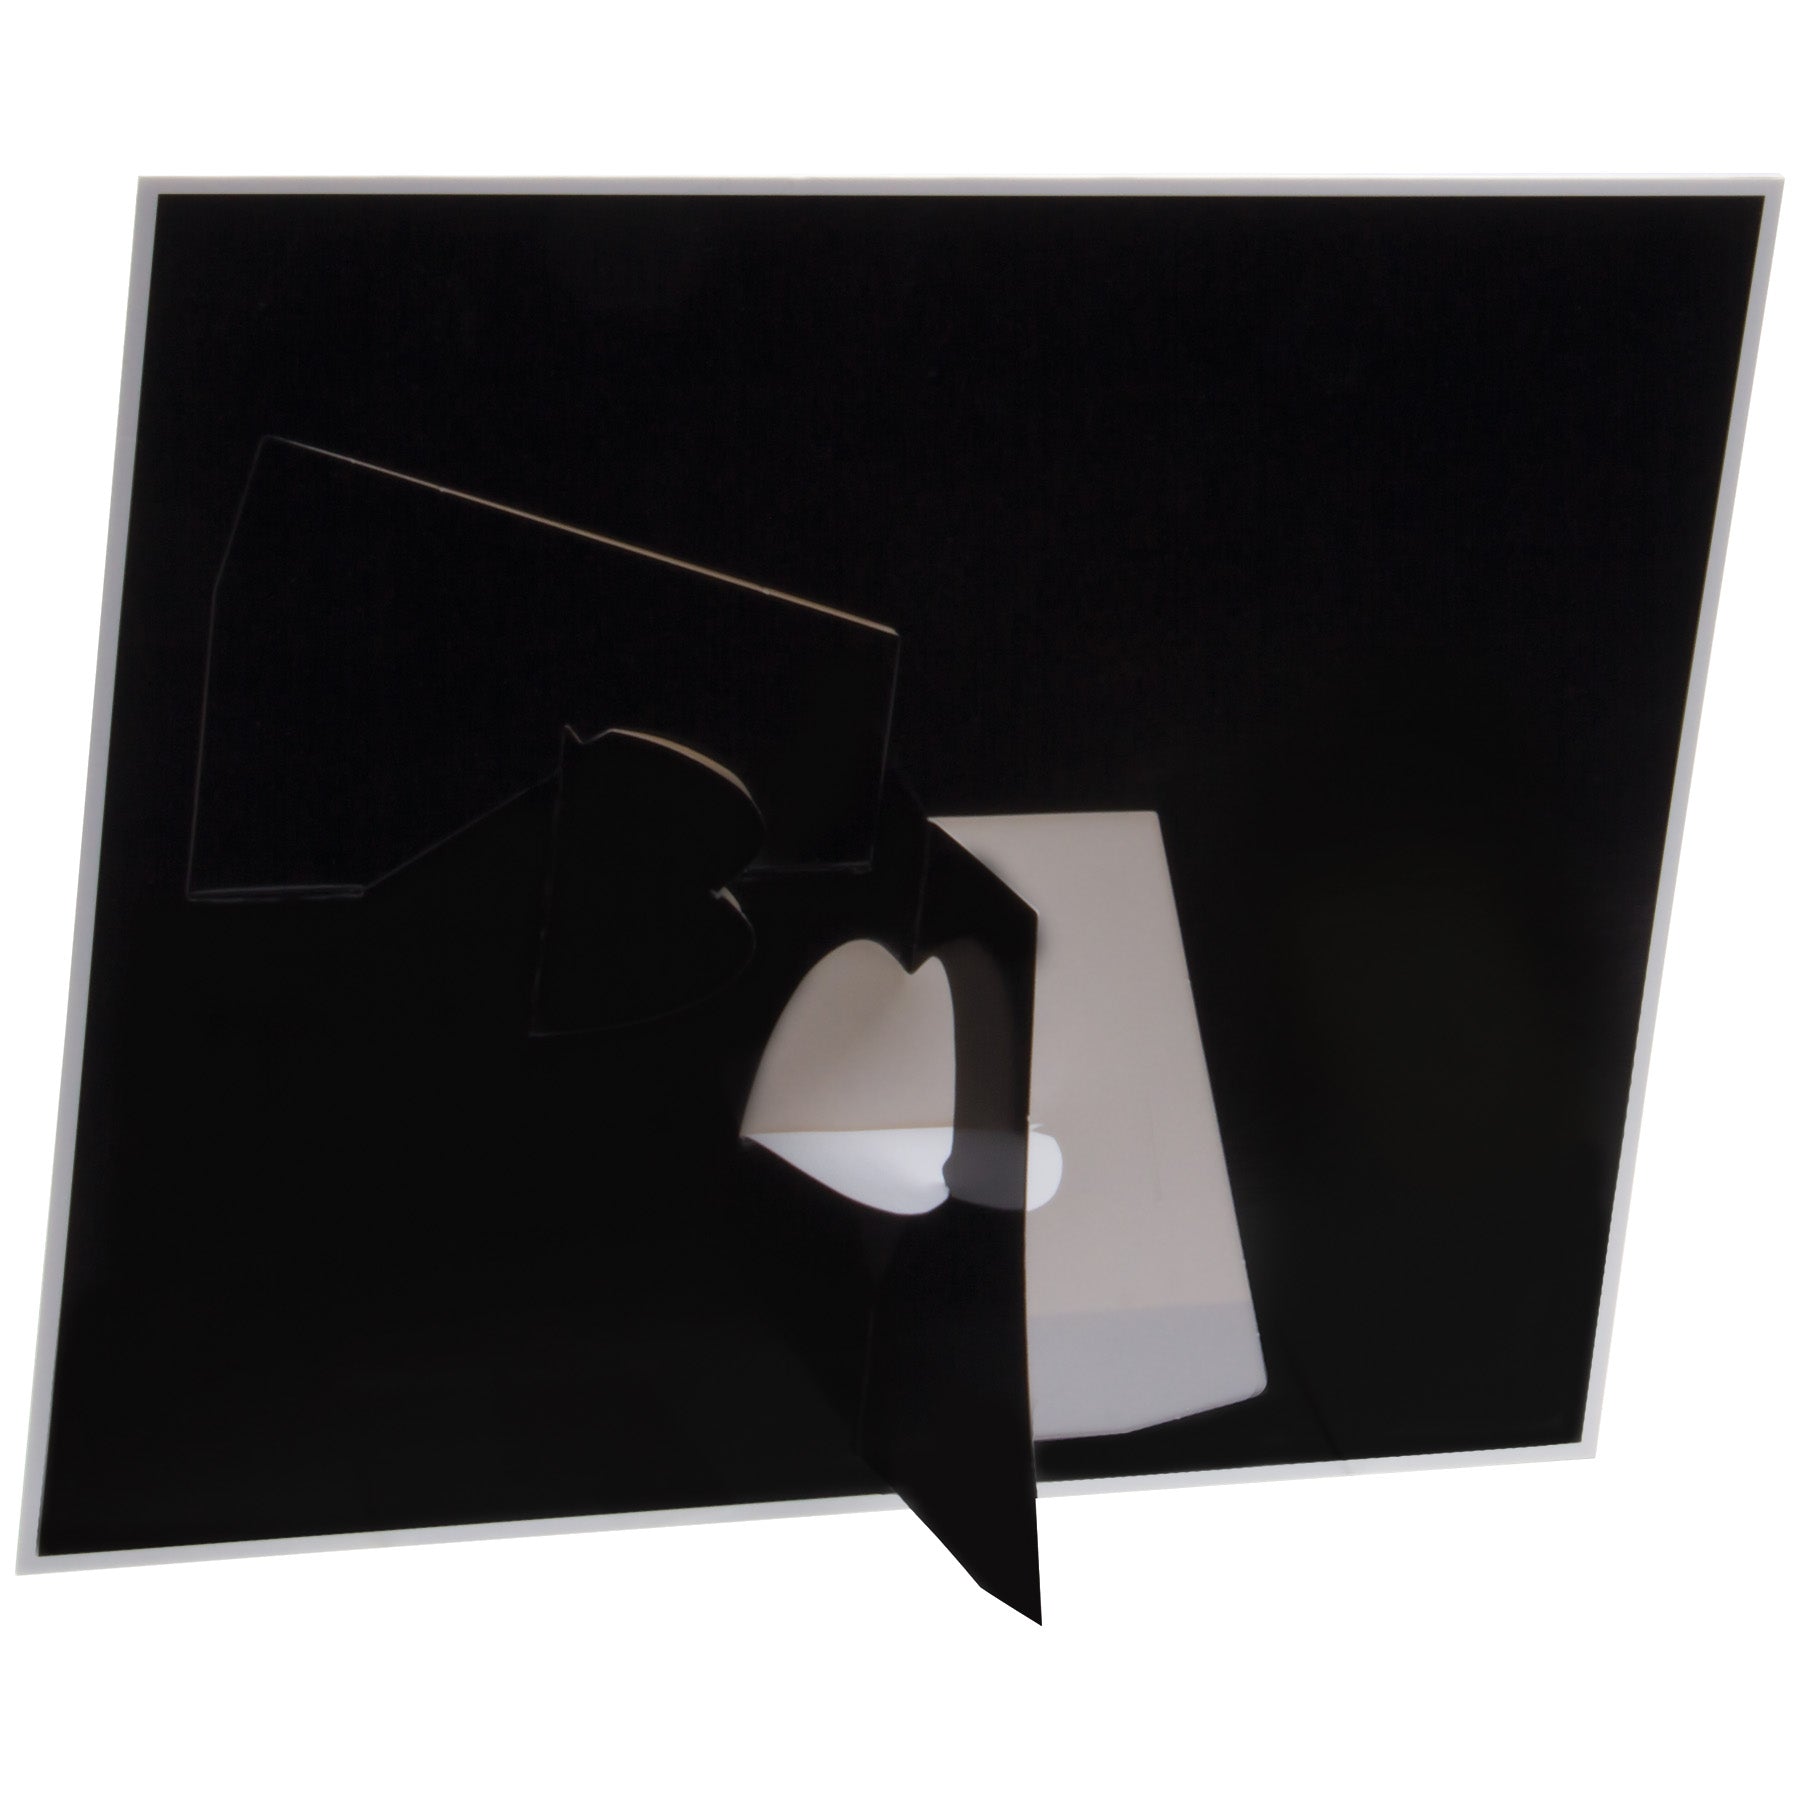 Black & White Cardboard Easel Picture Frame - Black Border